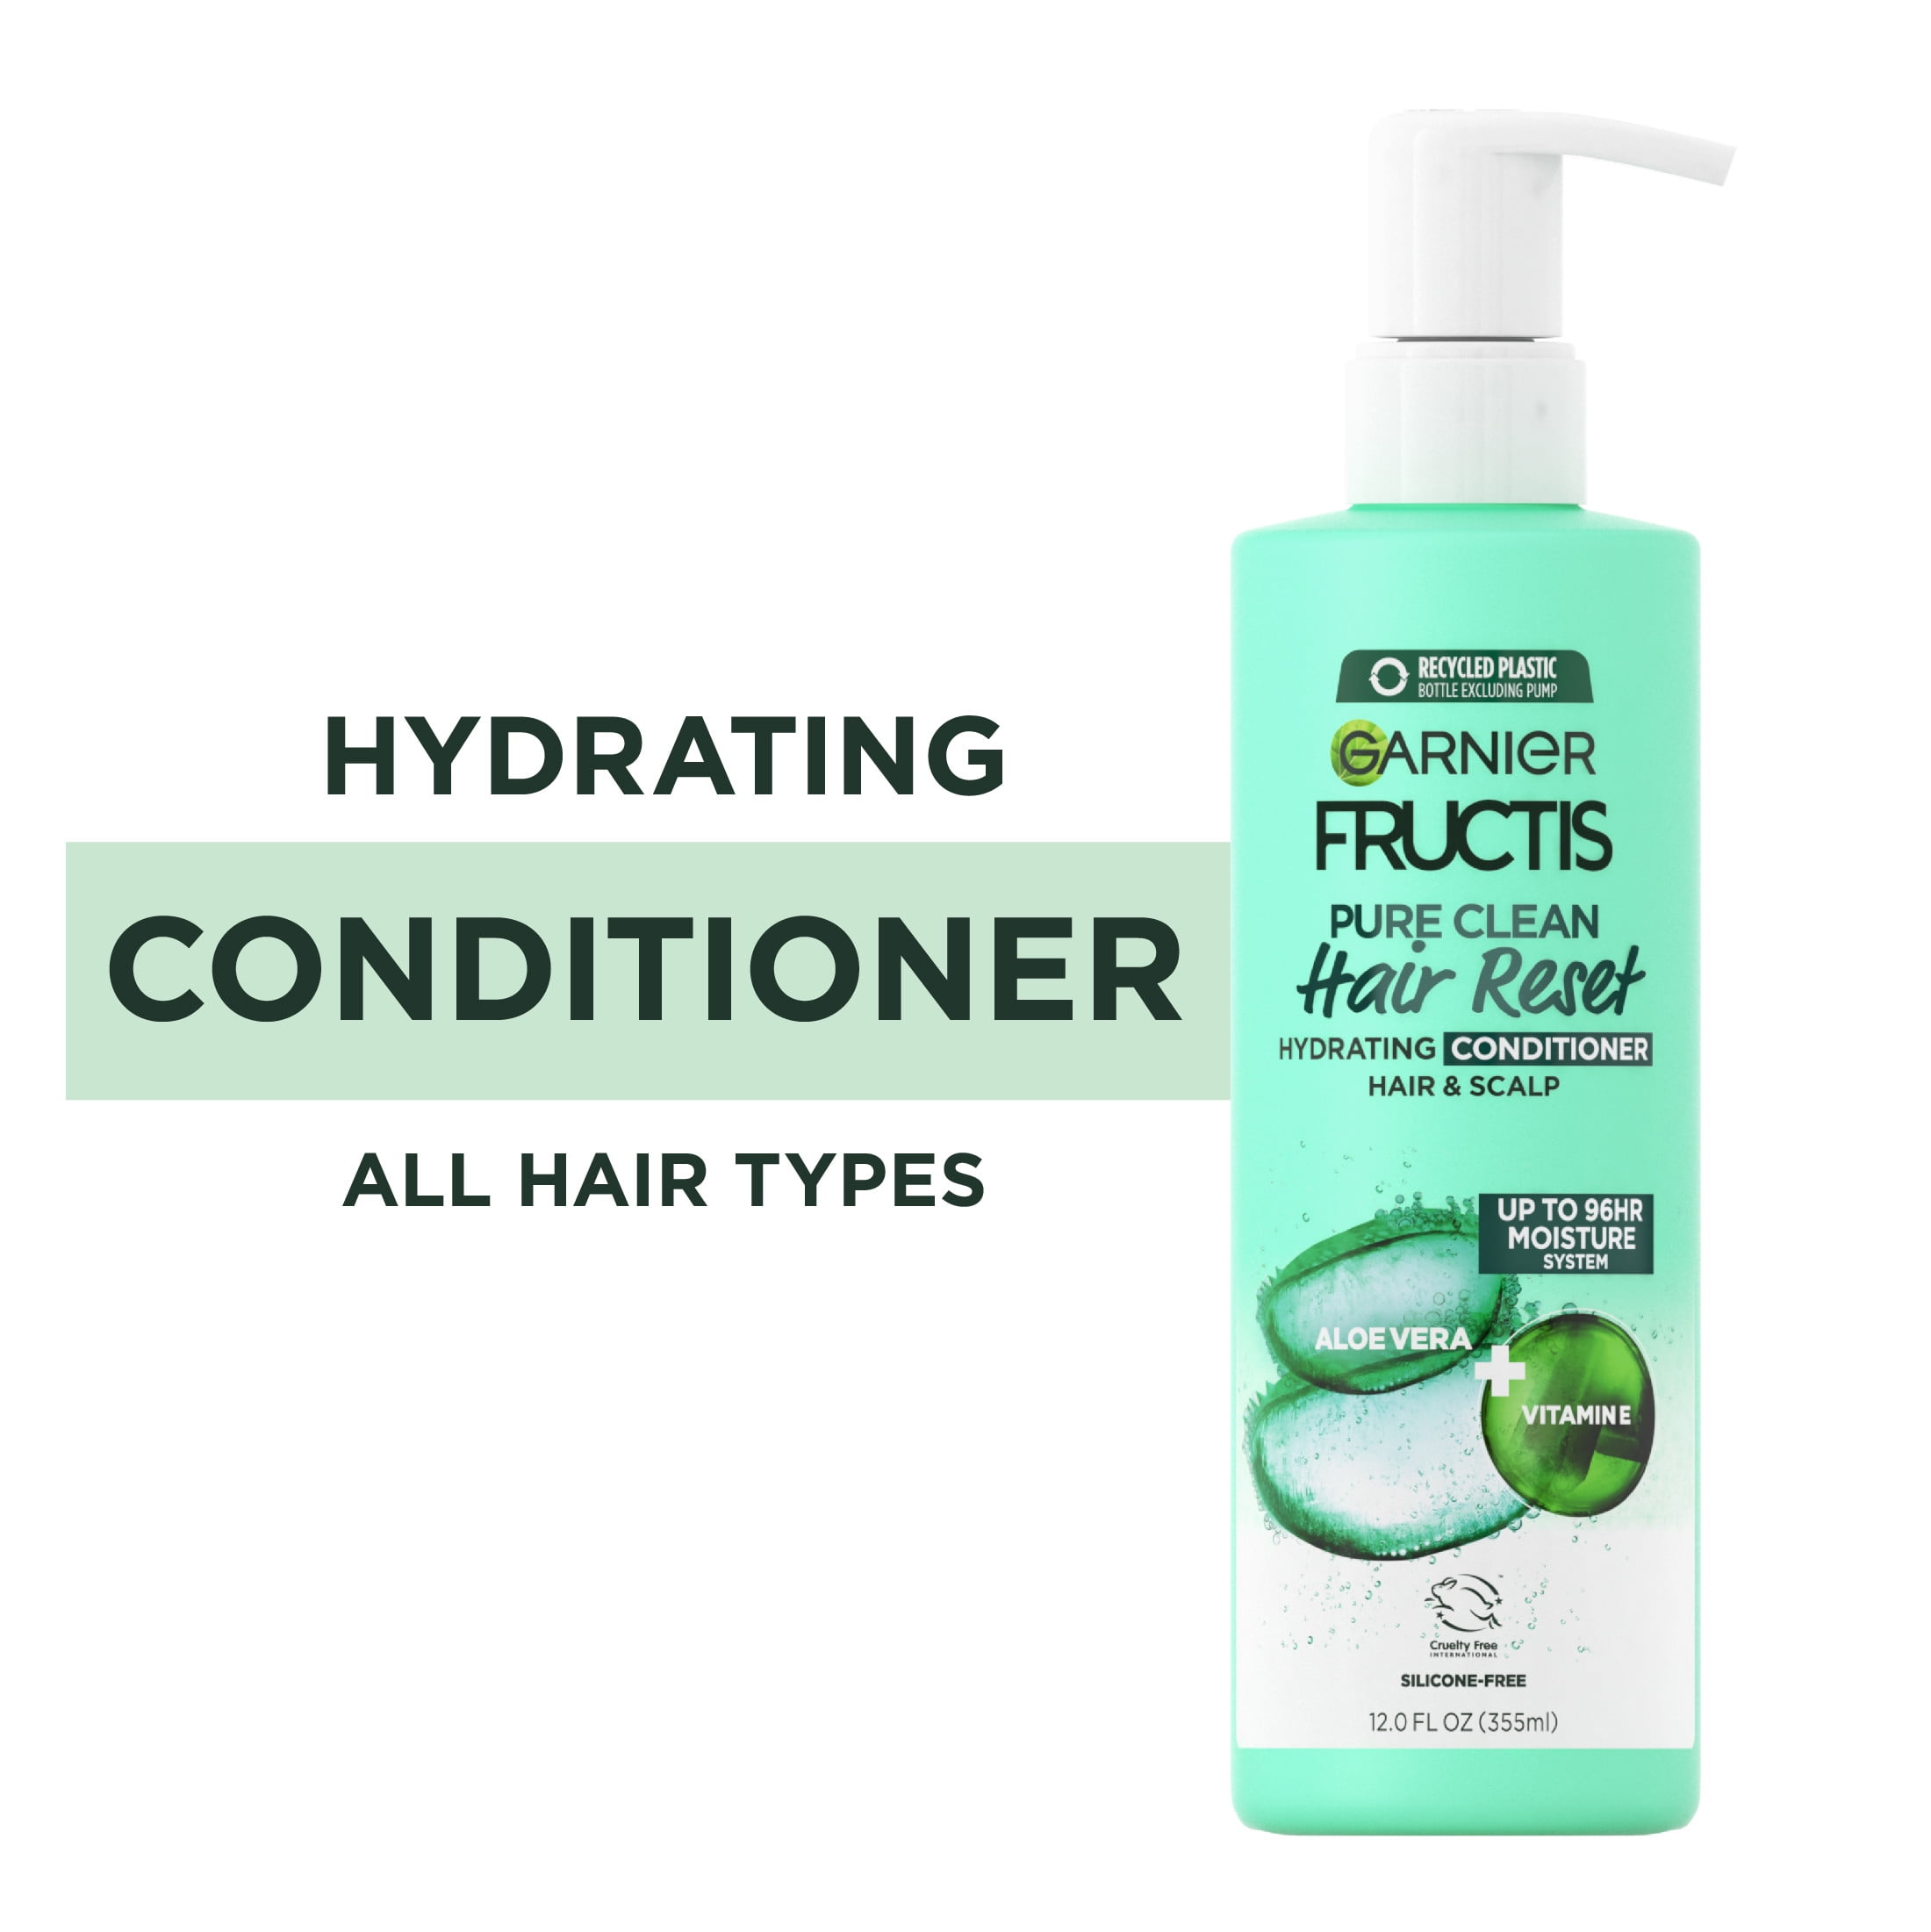 Garnier Fructis Pure Clean Hair Reset Hydrating Conditioner, Aloe, 12 fl oz